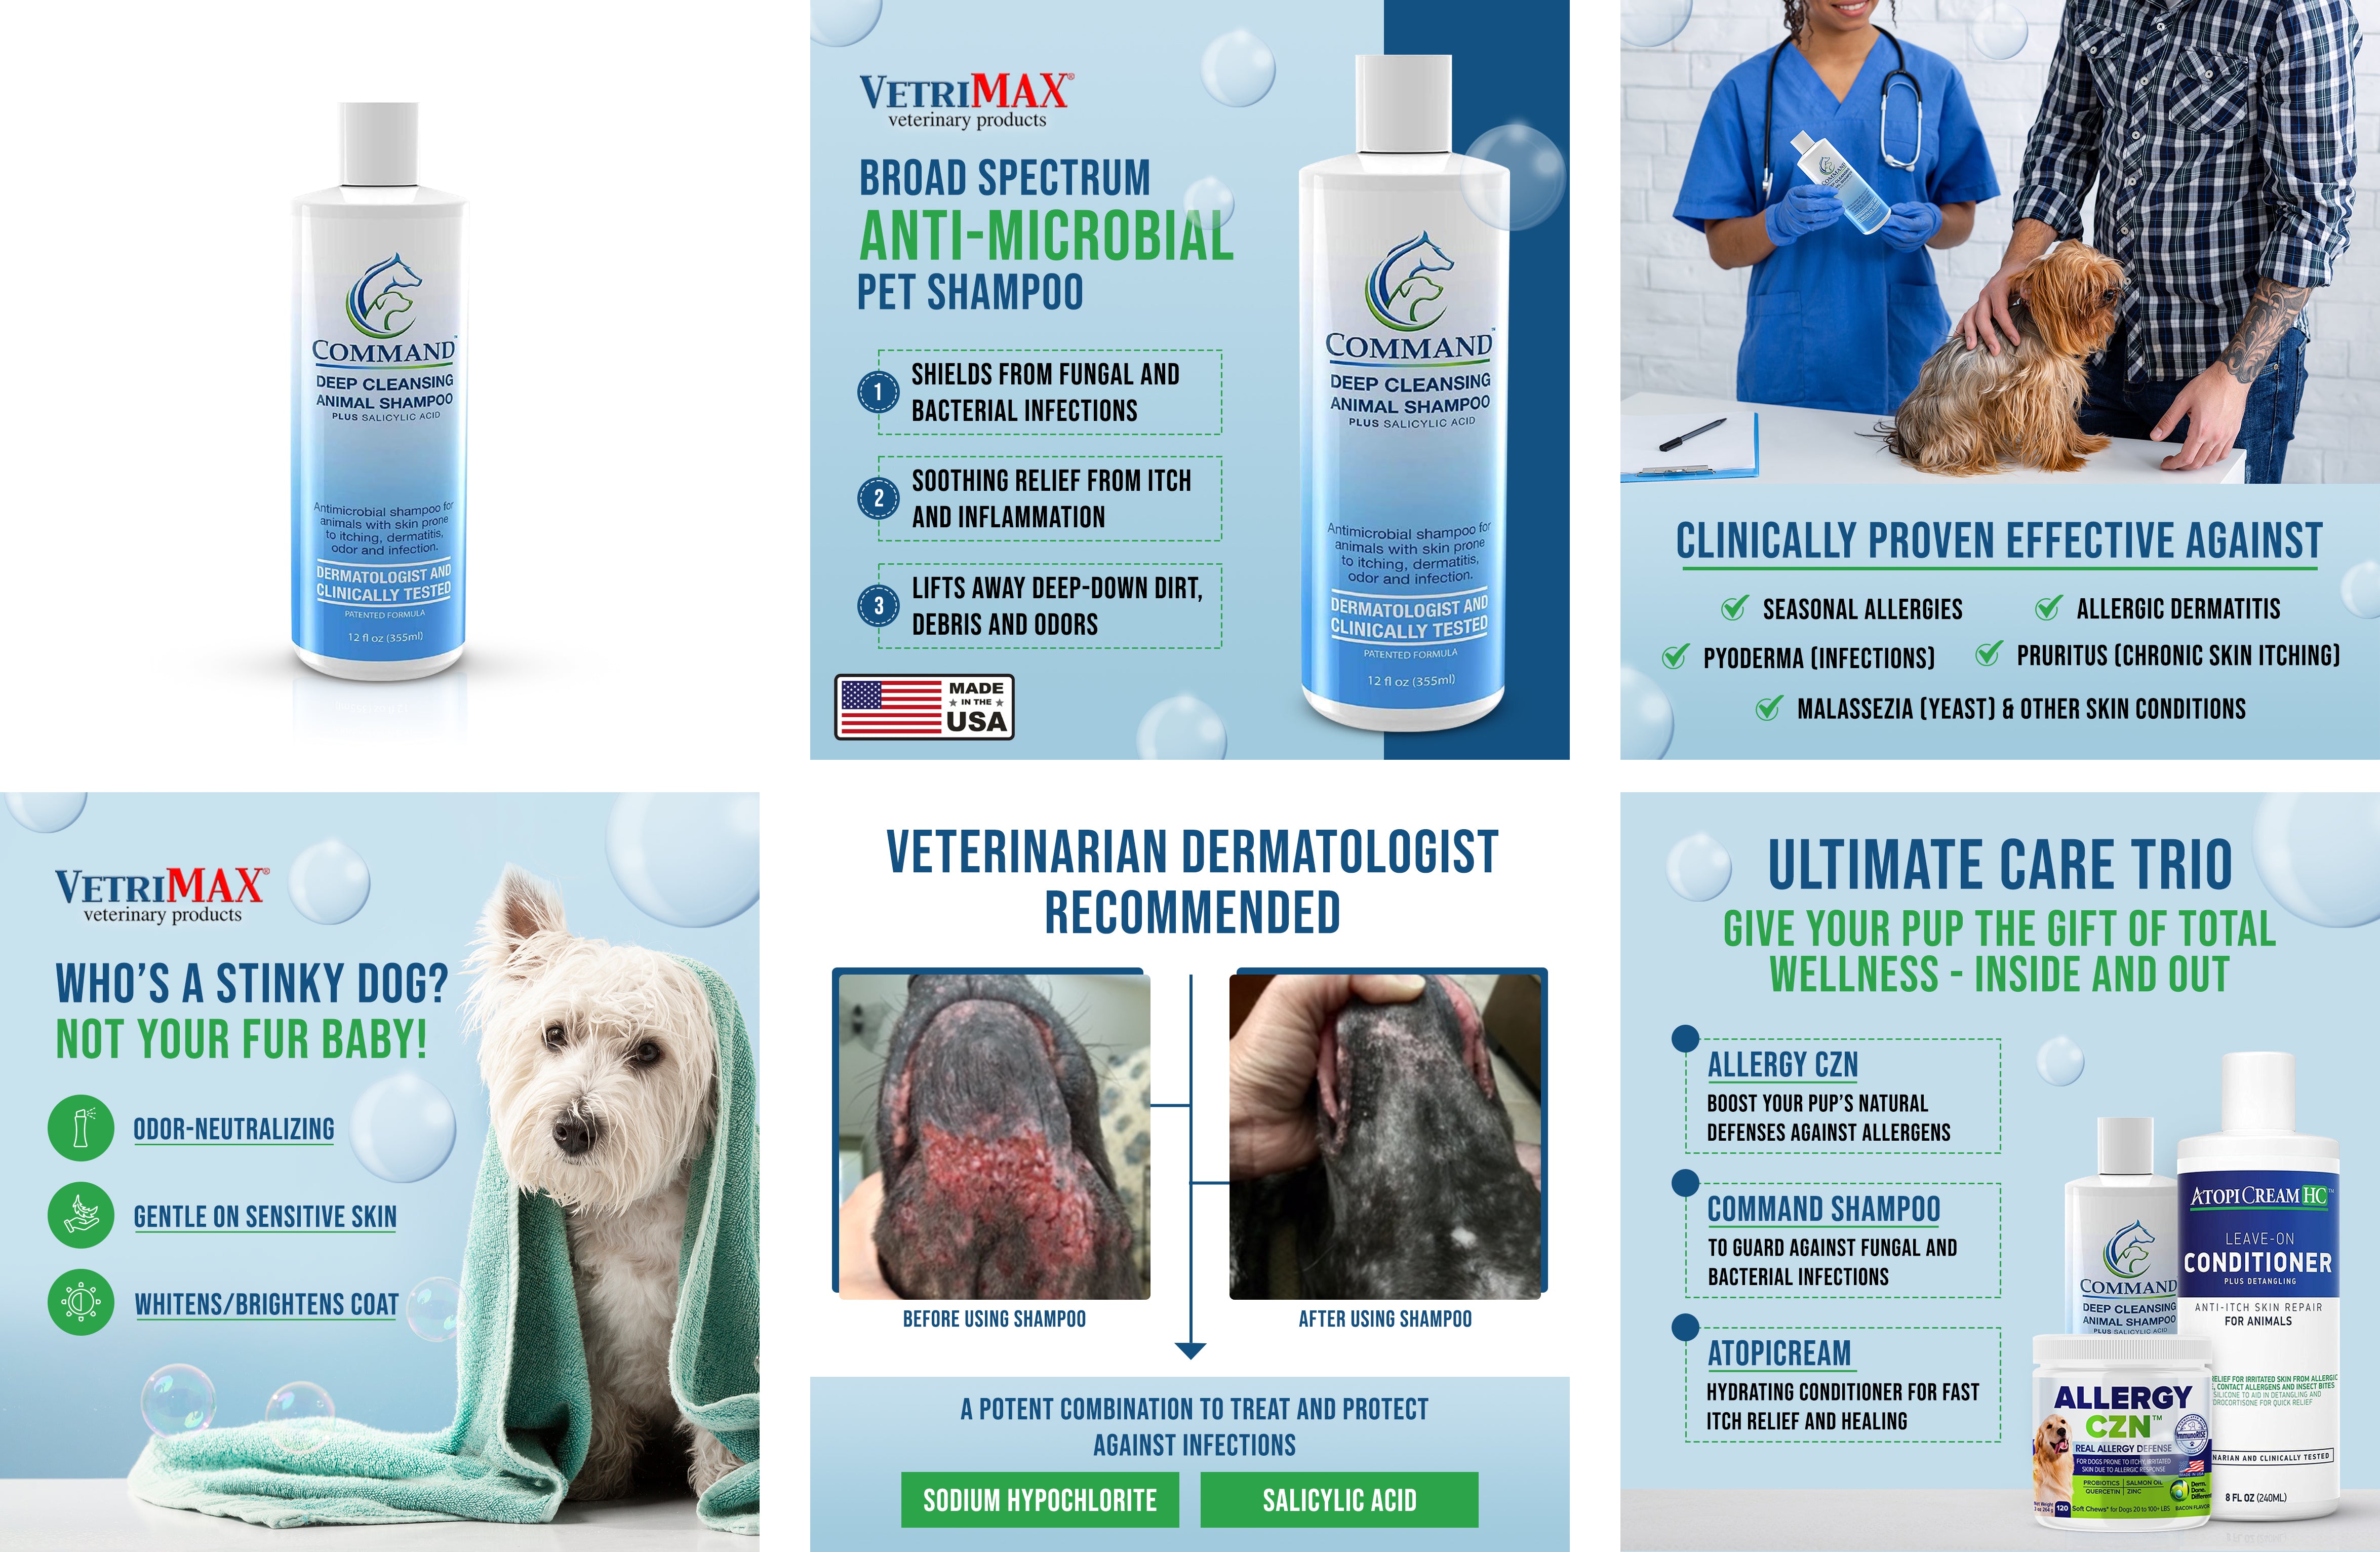 Command™ Shampoo for Animals